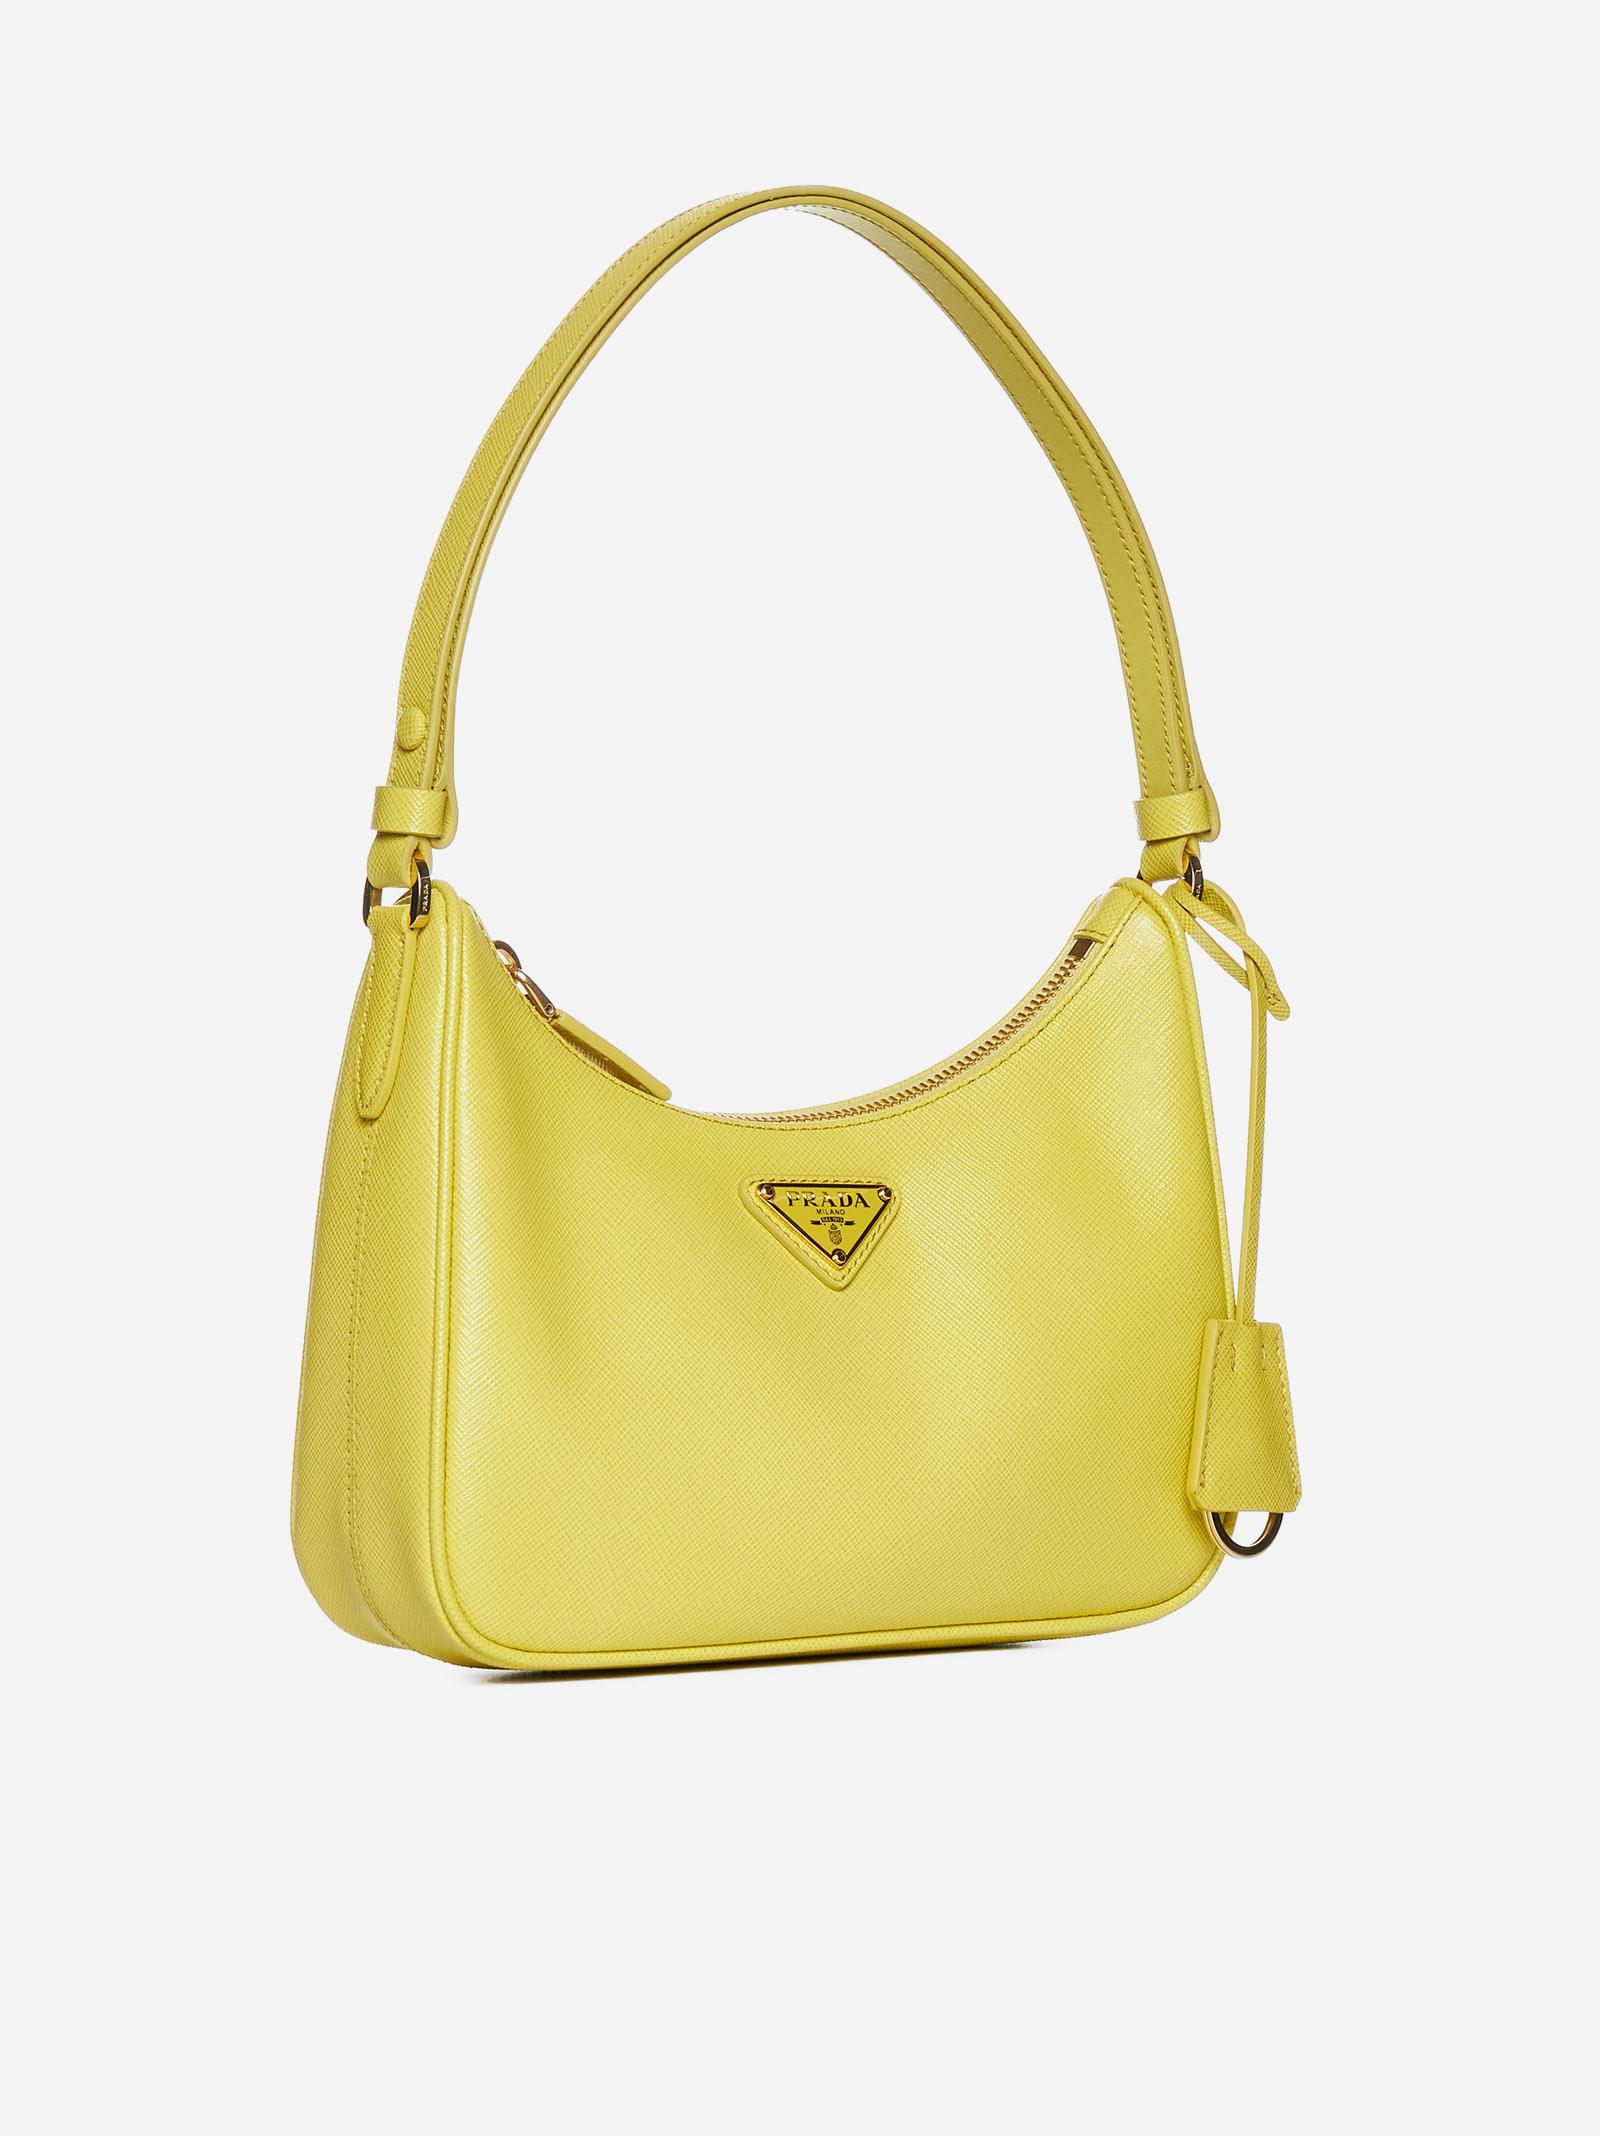 Prada Saffiano Leather Mini Bag in Yellow | Lyst